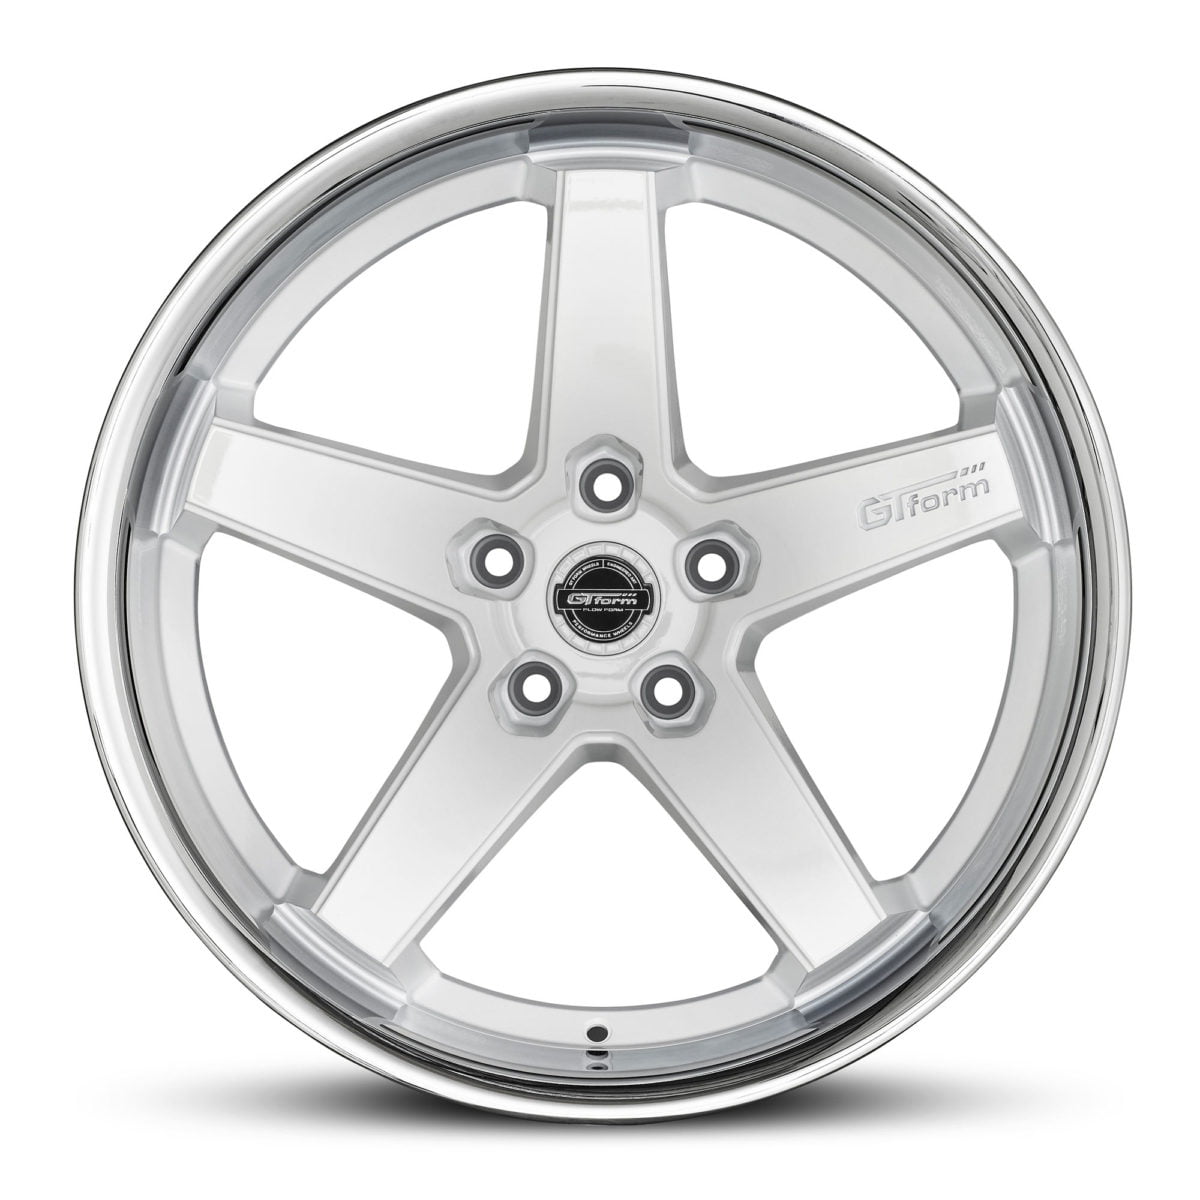 GT Form Legacy gloss white chrome lip wheels car rims performance wheels